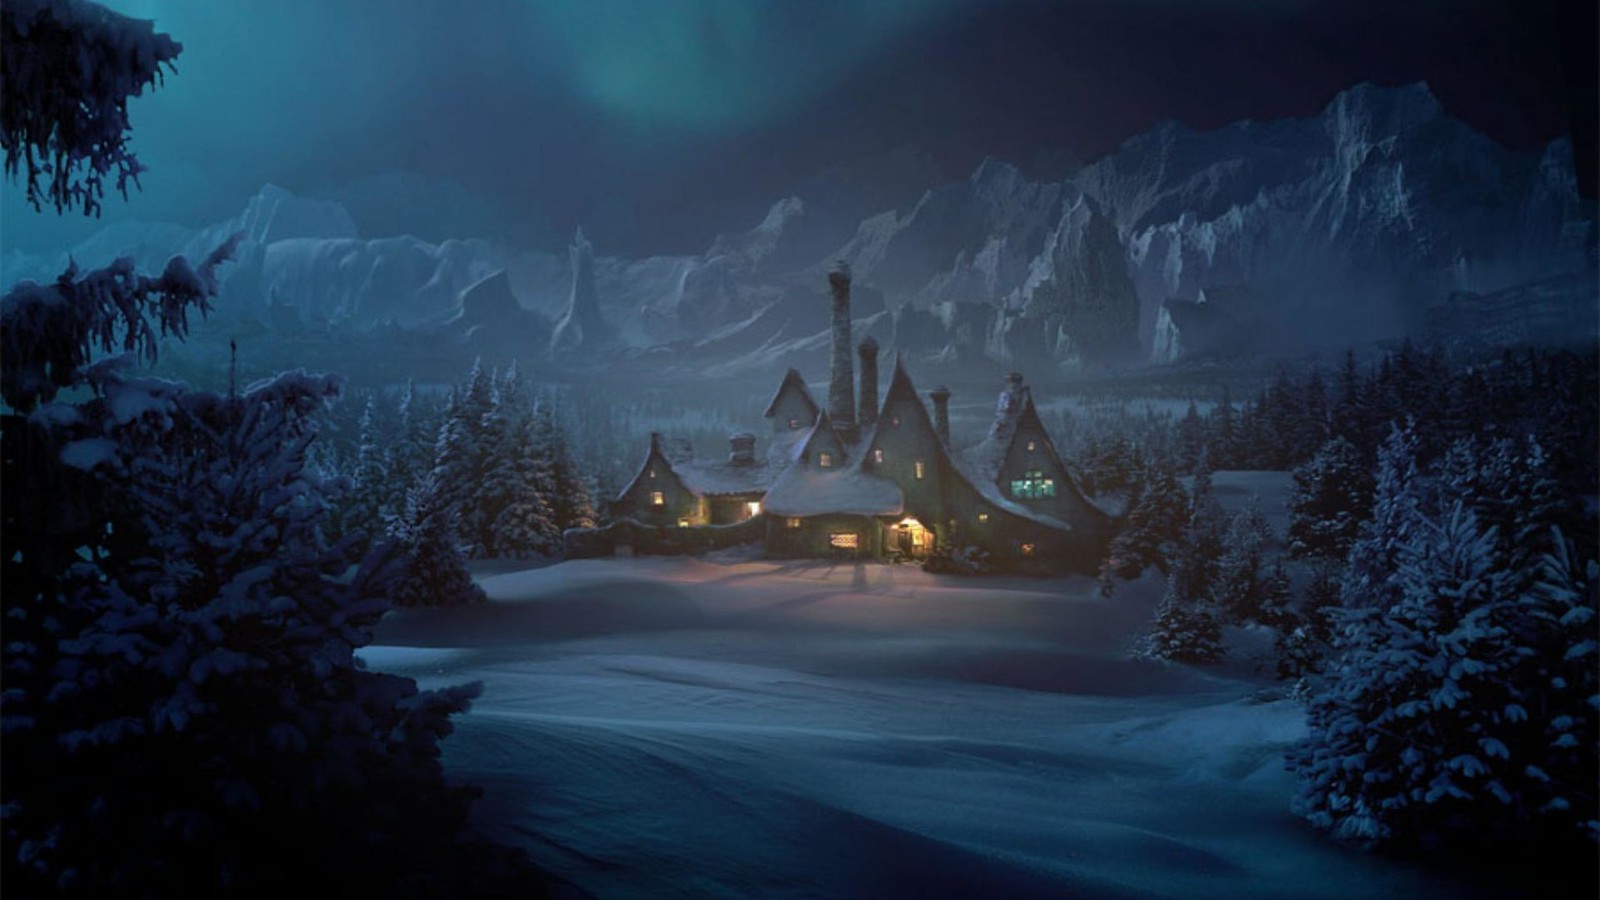 A Fantasy Winter Landscape Wallpaper. Lovely New